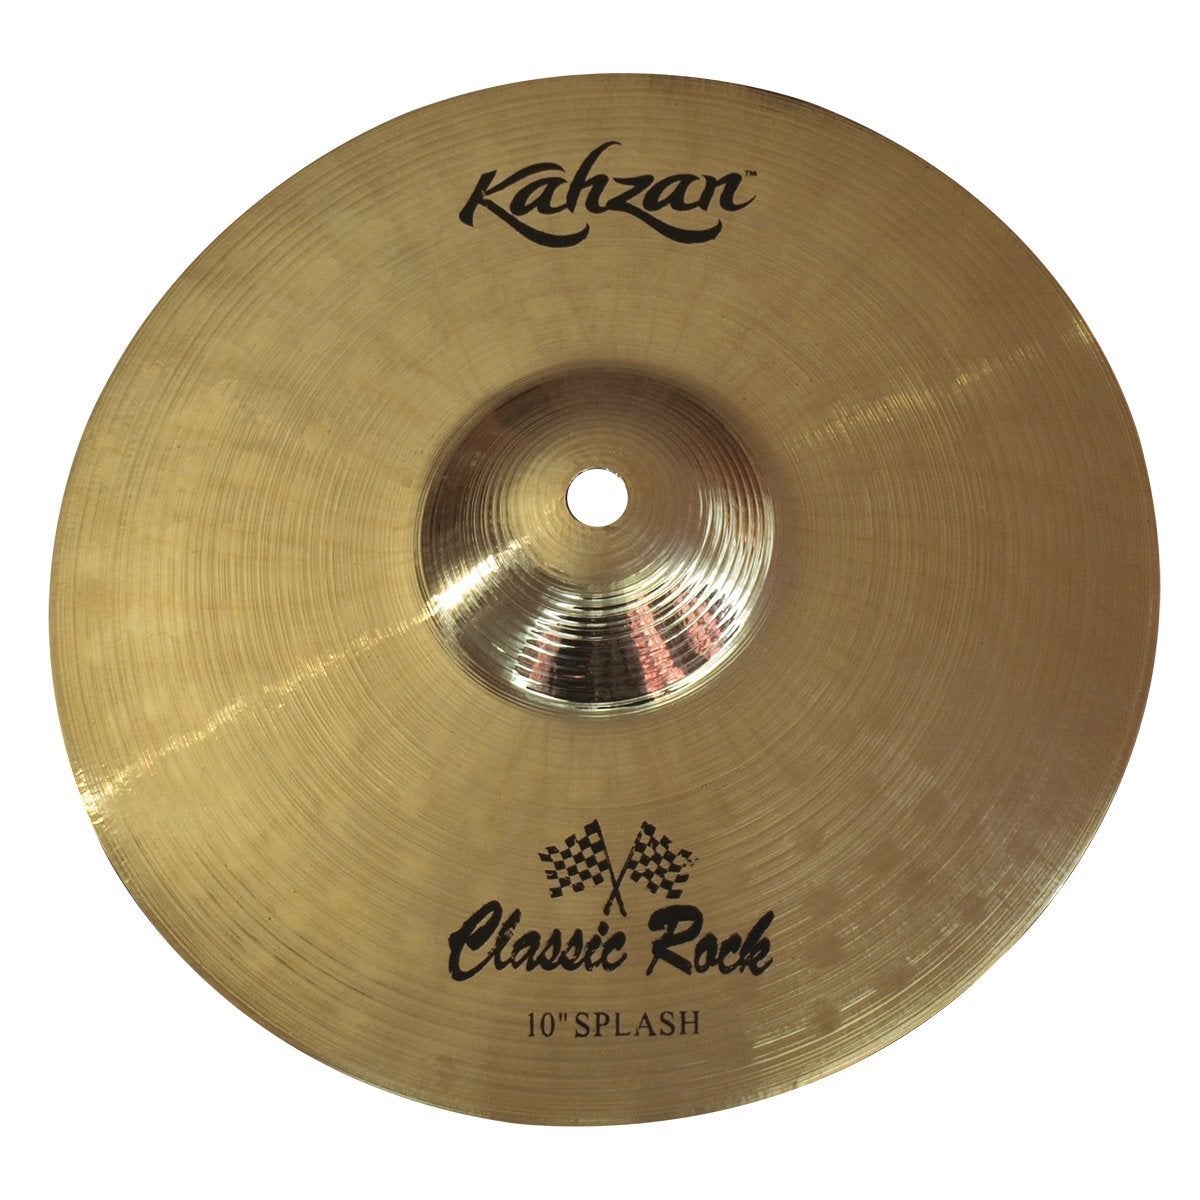 Kahzan 'Classic Rock Series' Splash Cymbal (10")